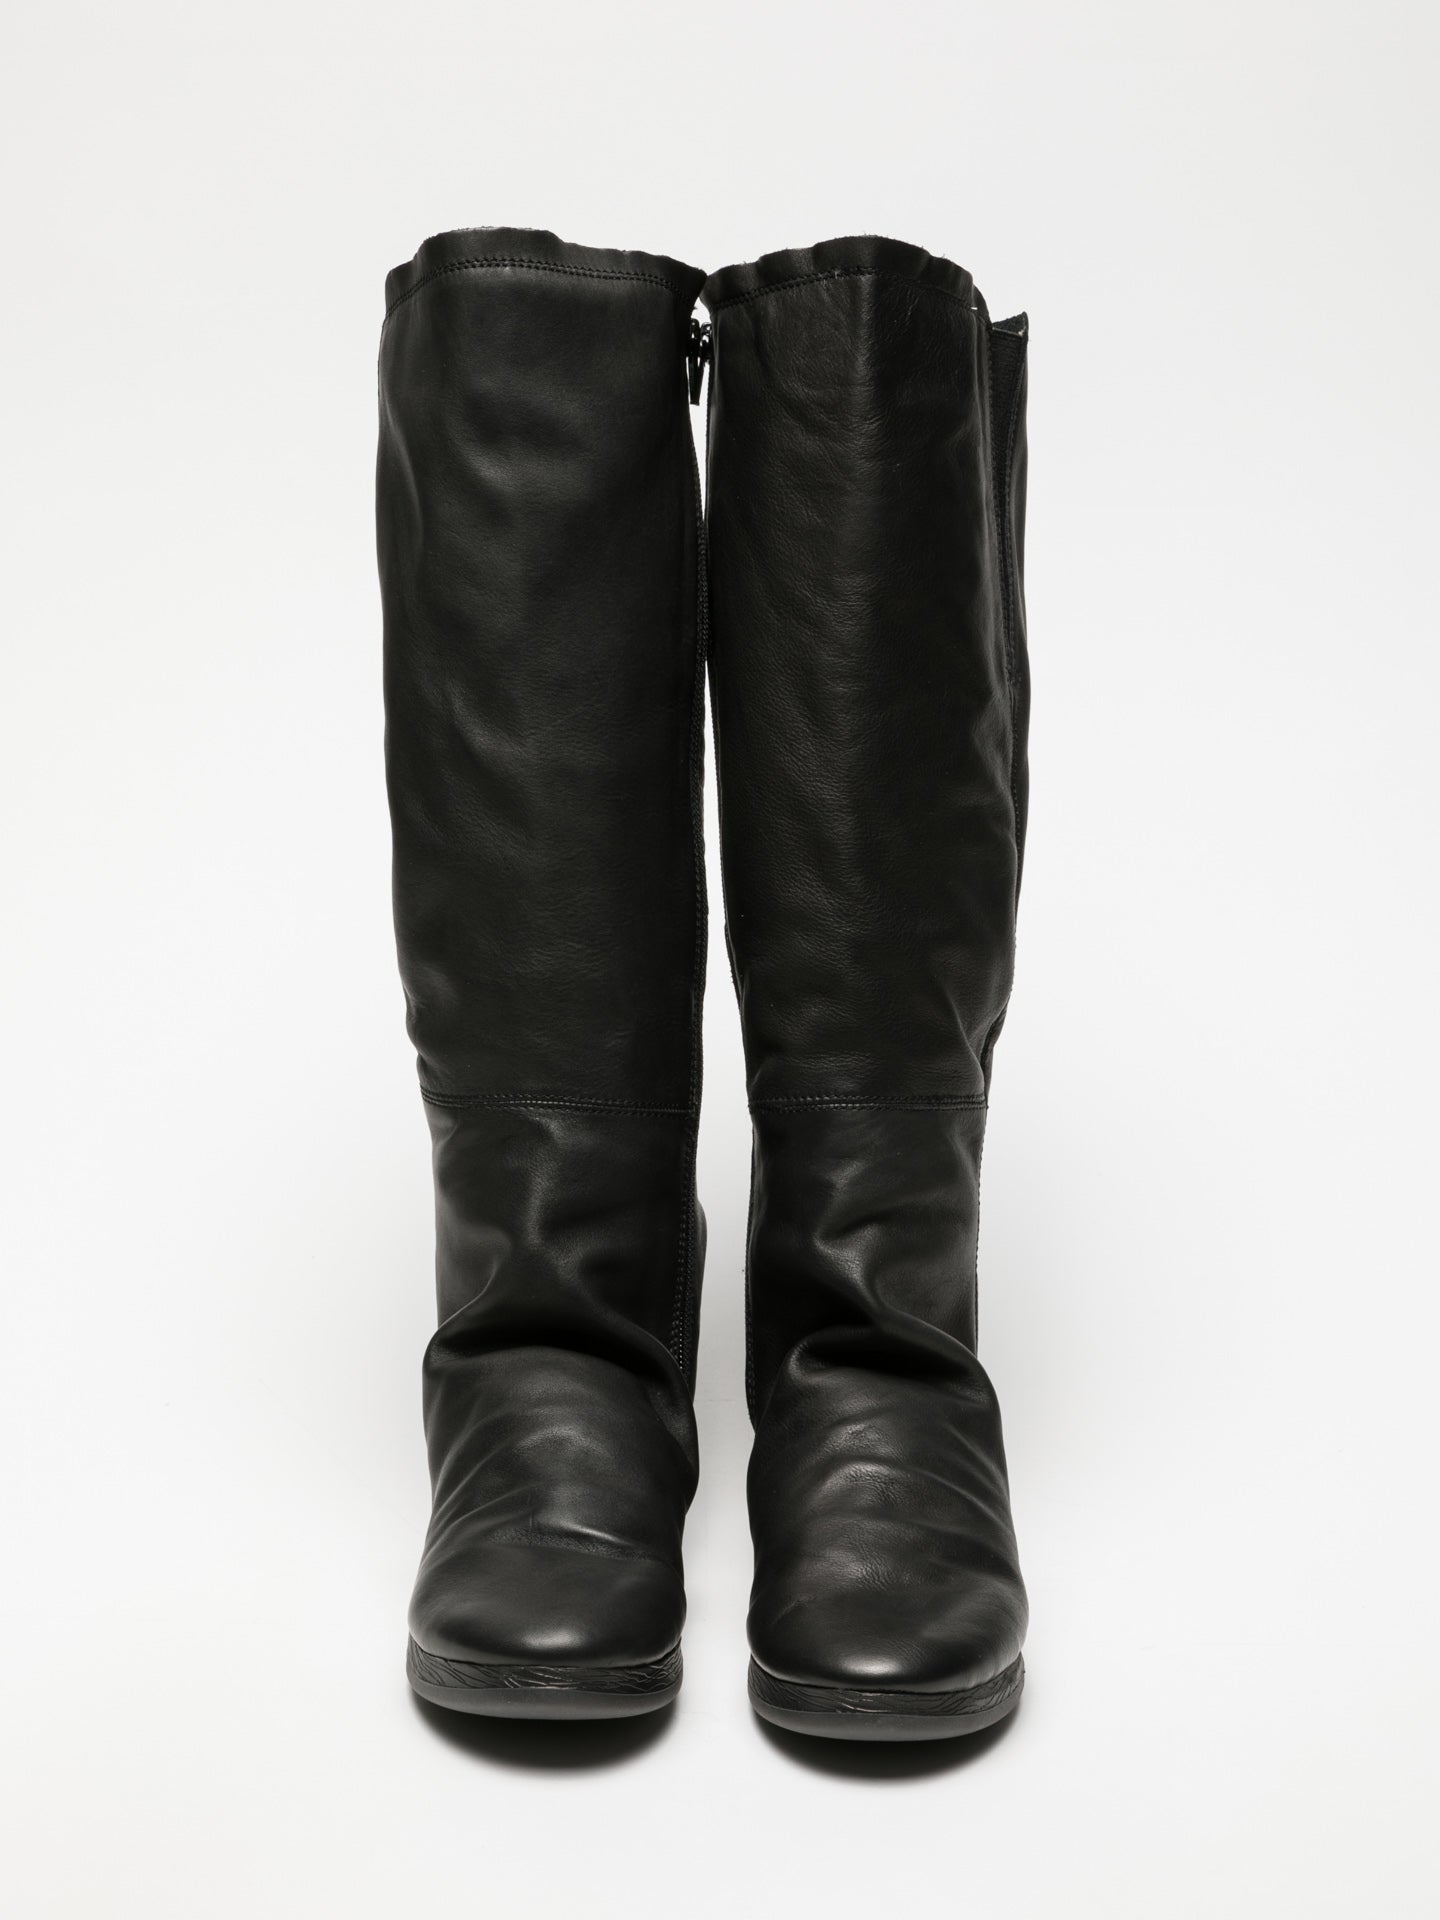 Softinos Black Knee-High Boots